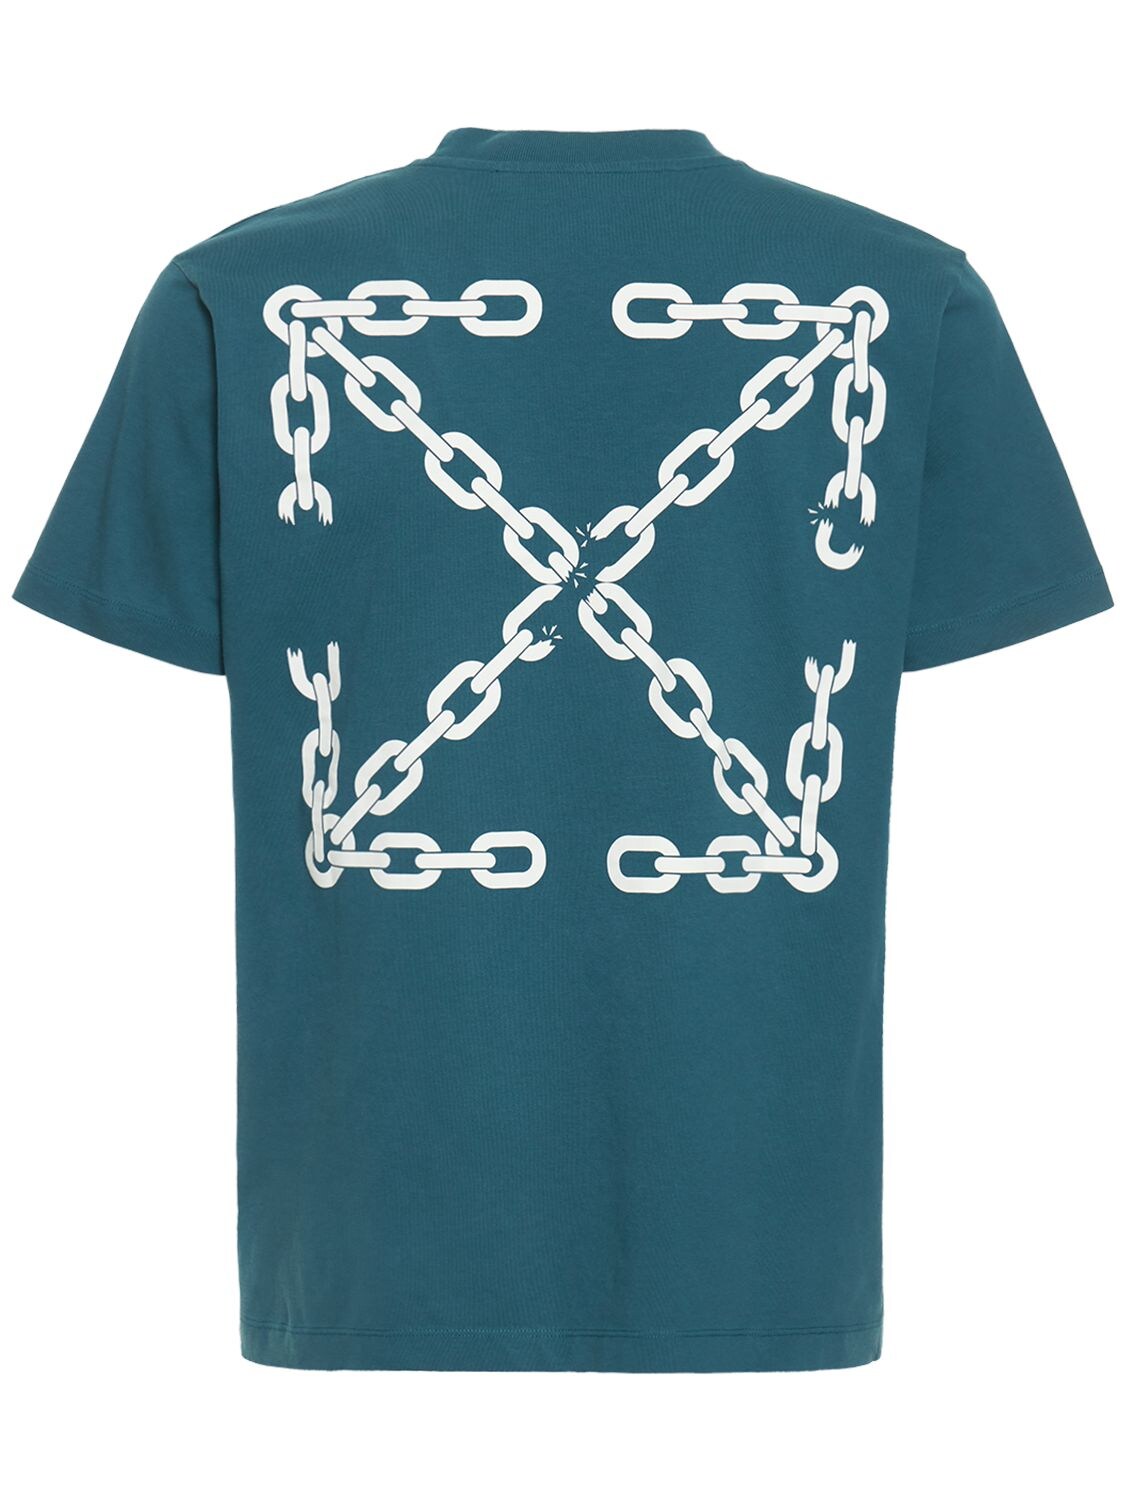 OFF-WHITE Chain Arrow Print Cotton Jersey T-shirt